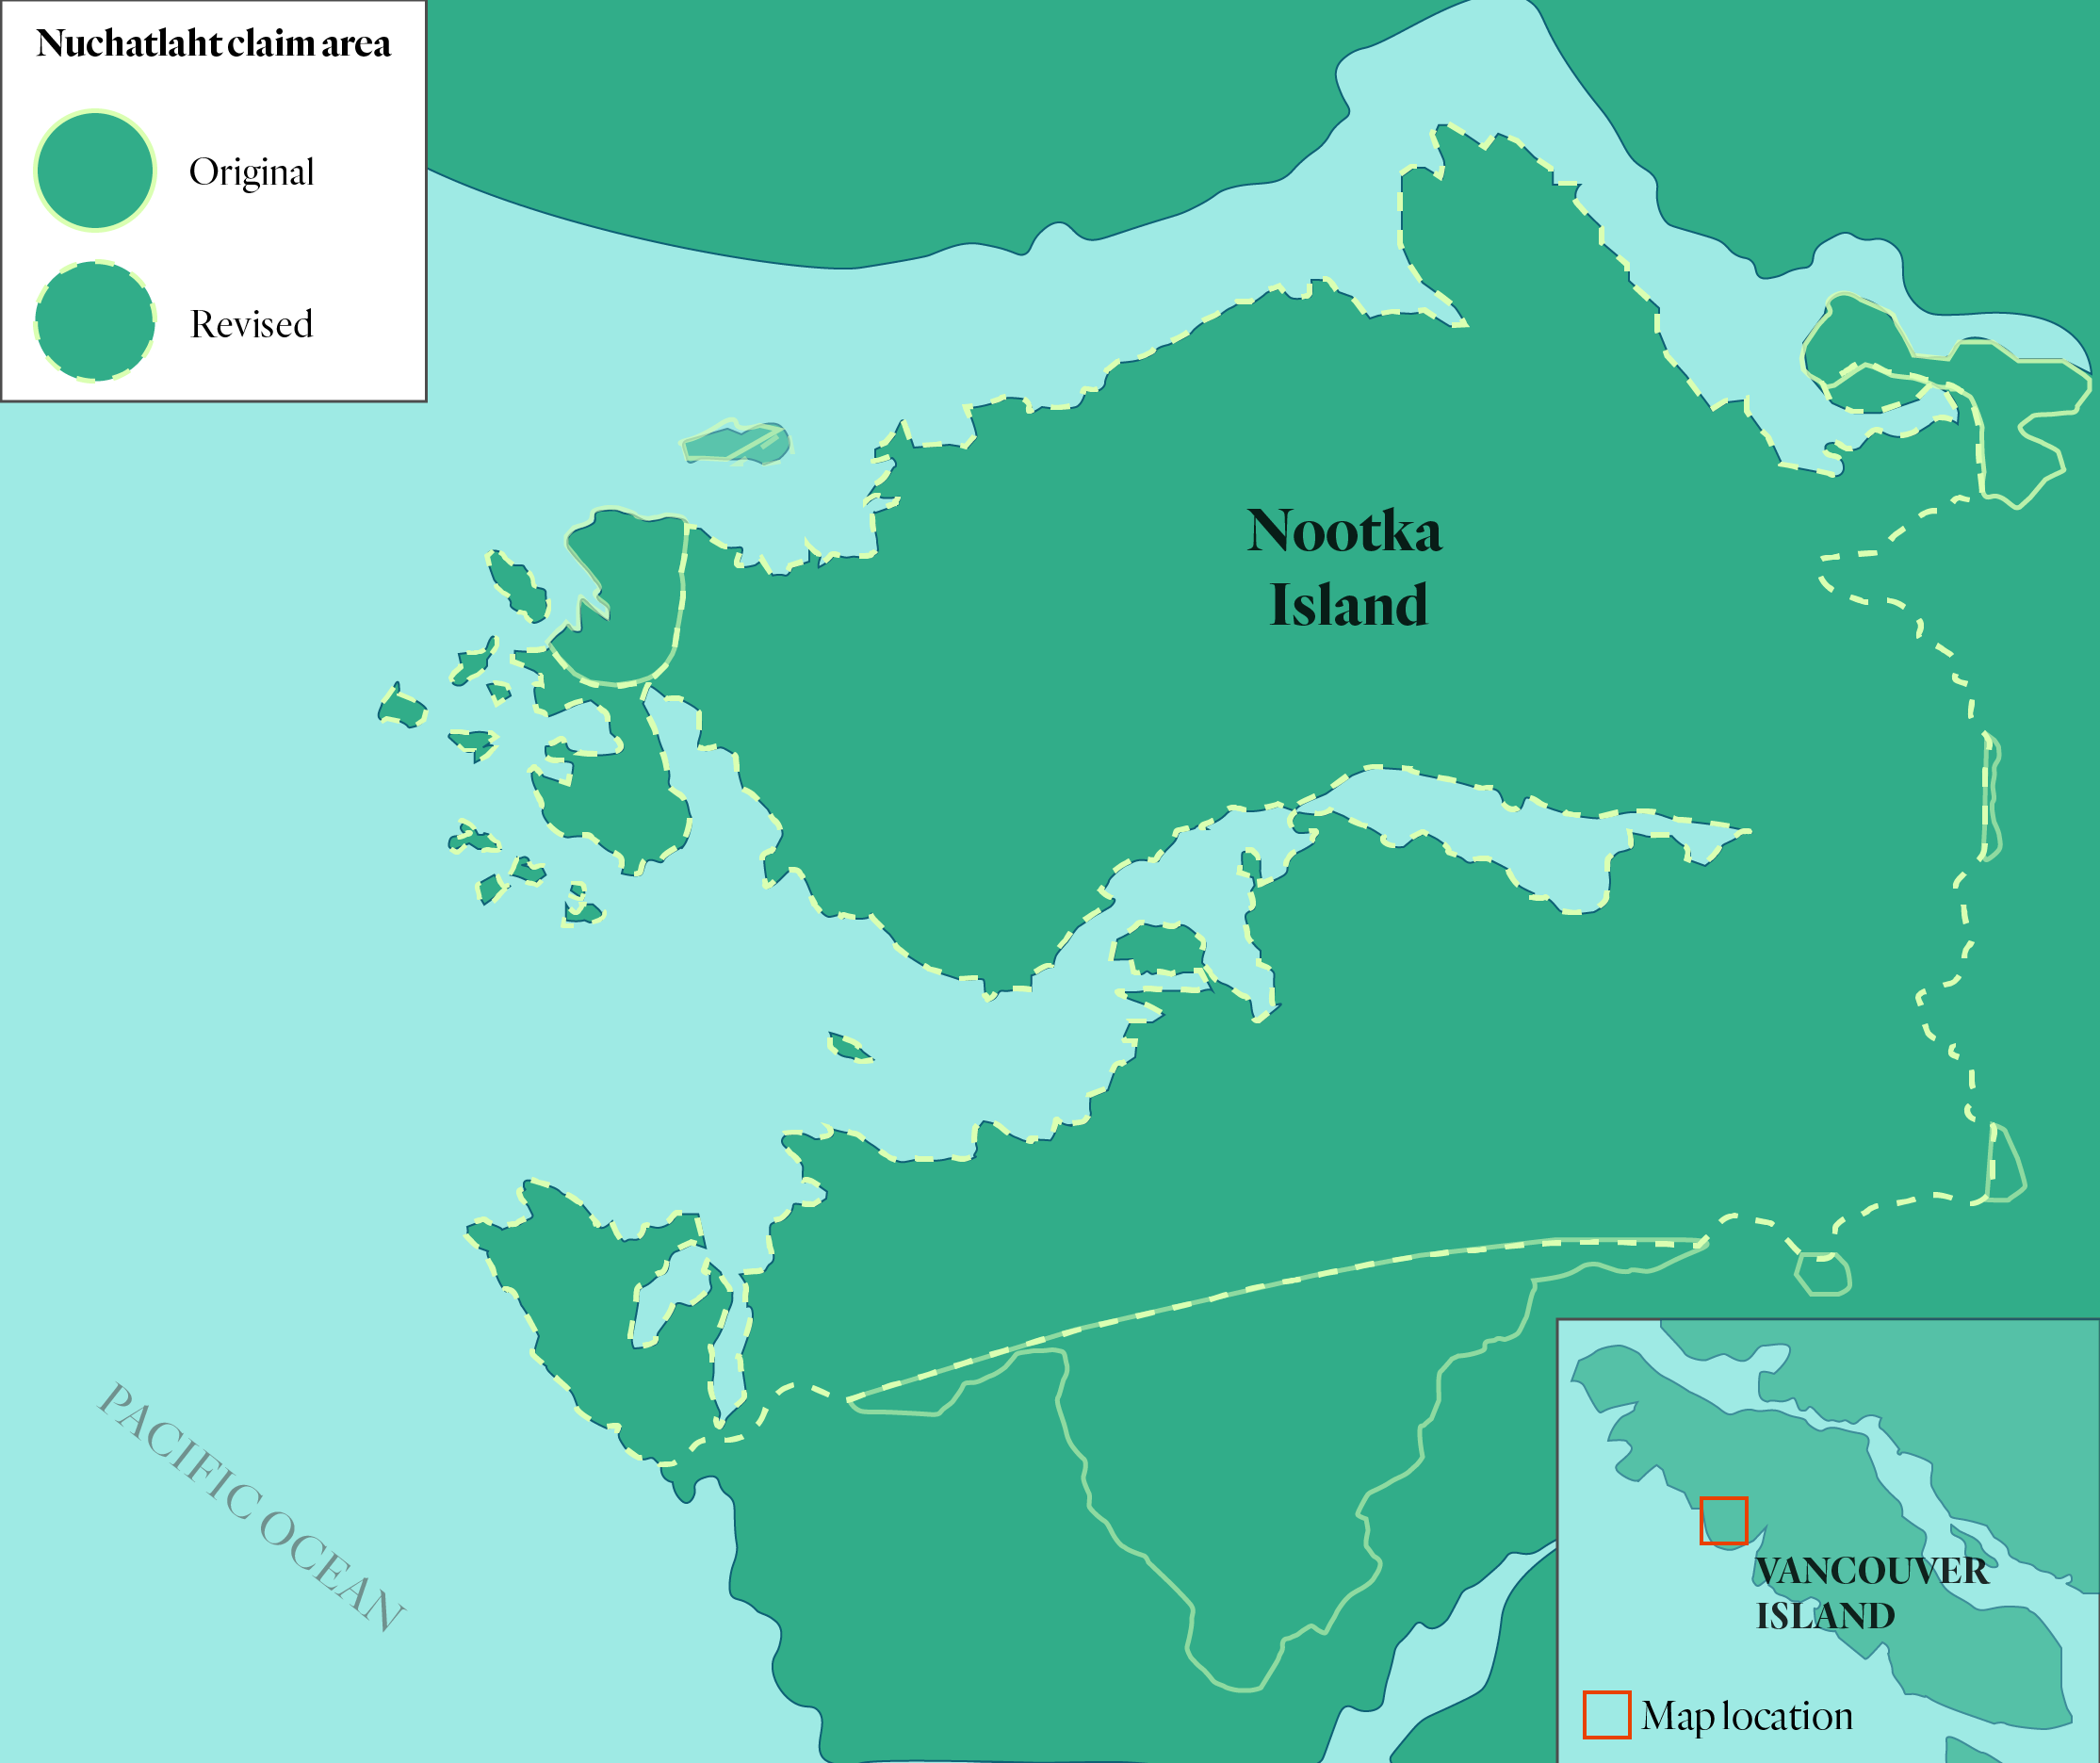 Boundaries of Nuchatlaht First Nation's title claim on Nootka Island